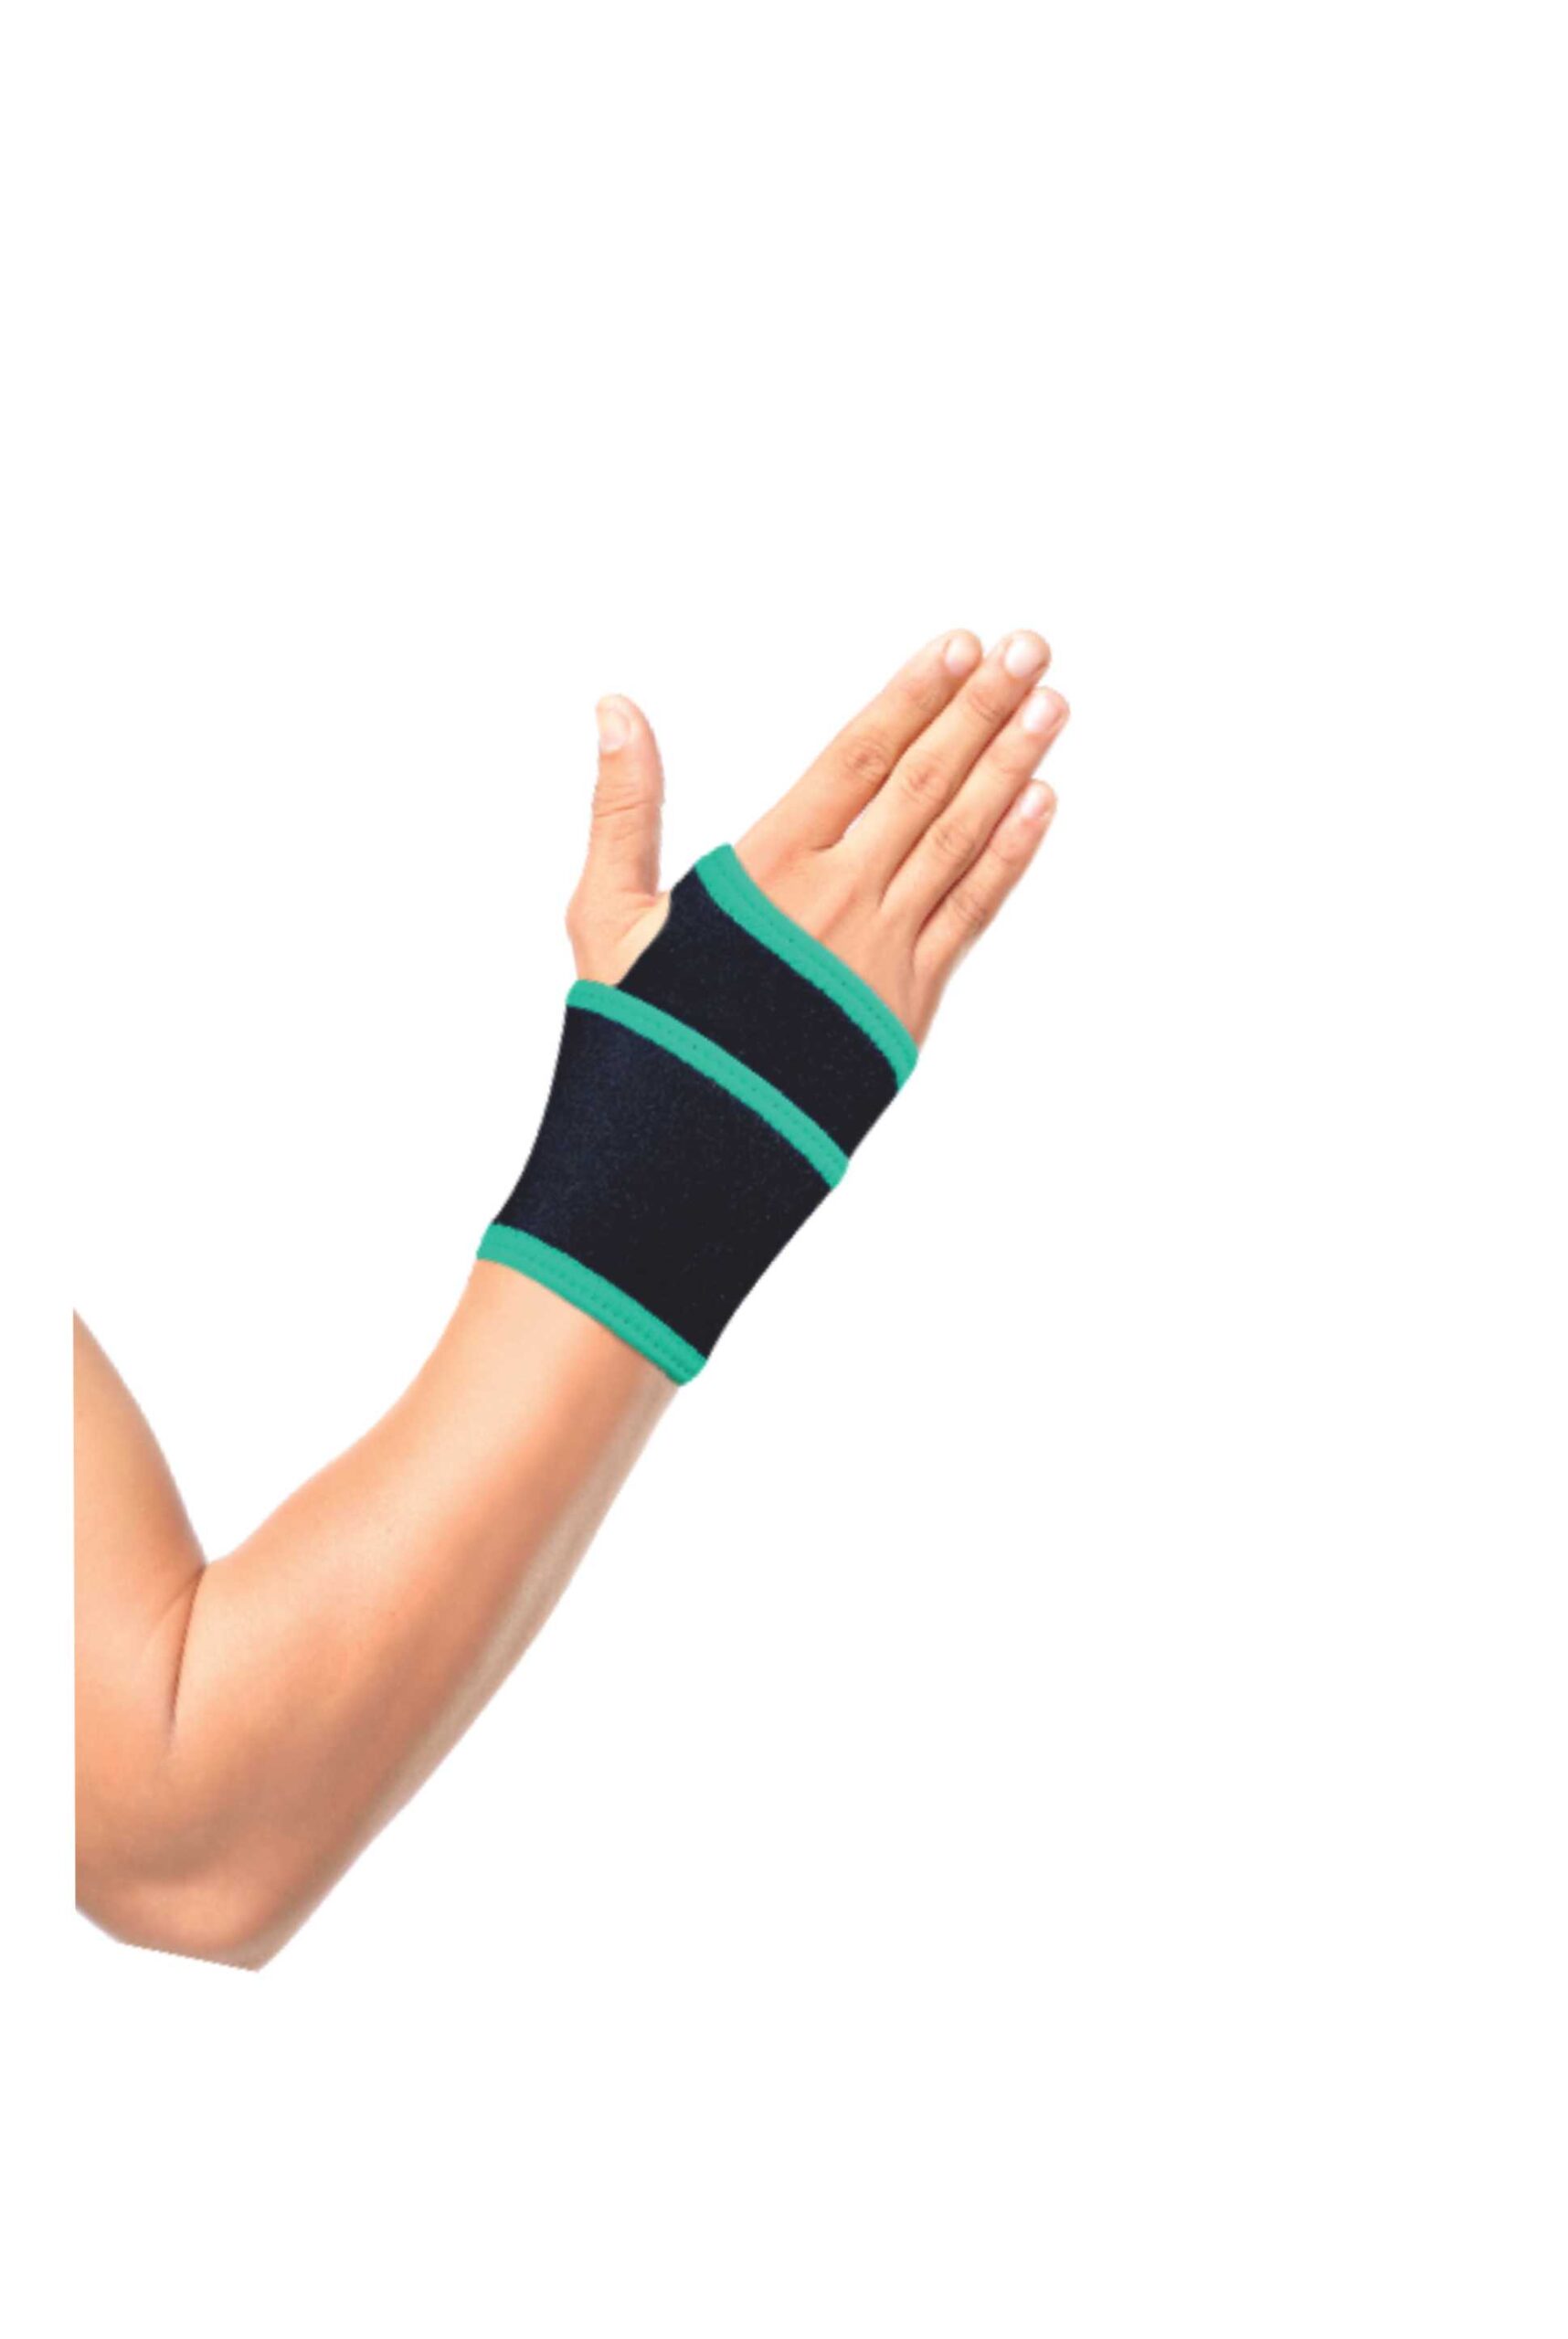 Dyna Wrist Brace Reversible Long at Rs 300